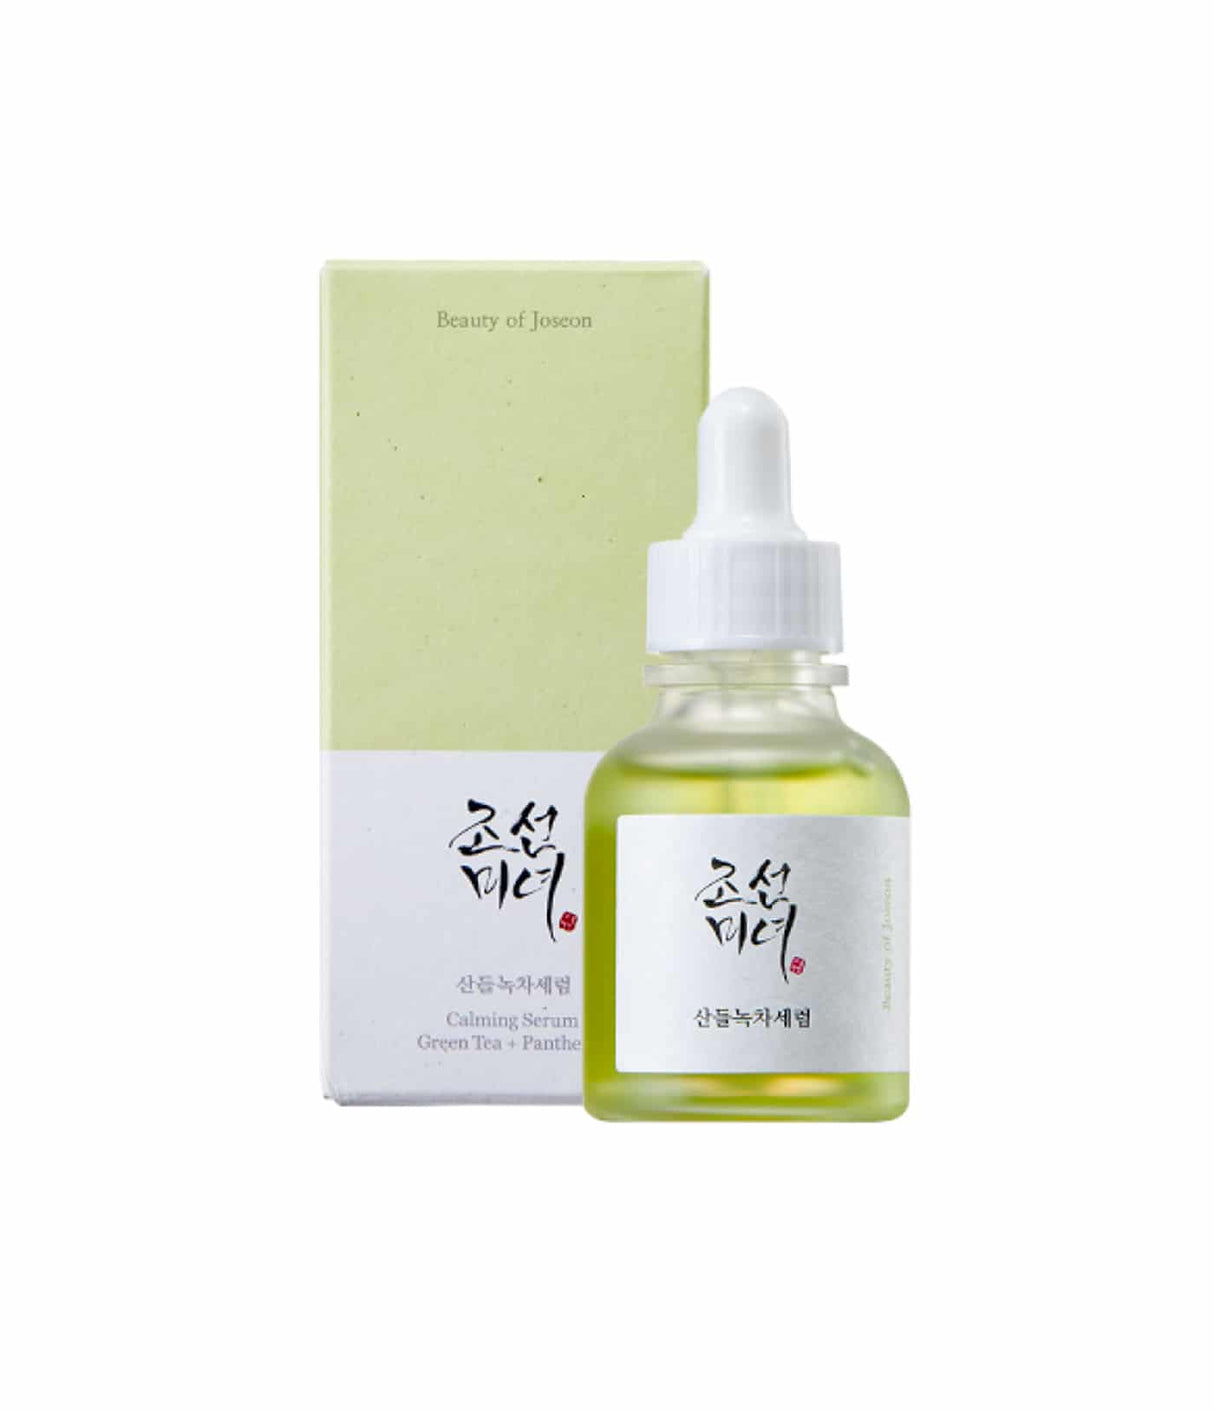 Calming Serum Green Tea + Panthenol de Beauty of Joseon